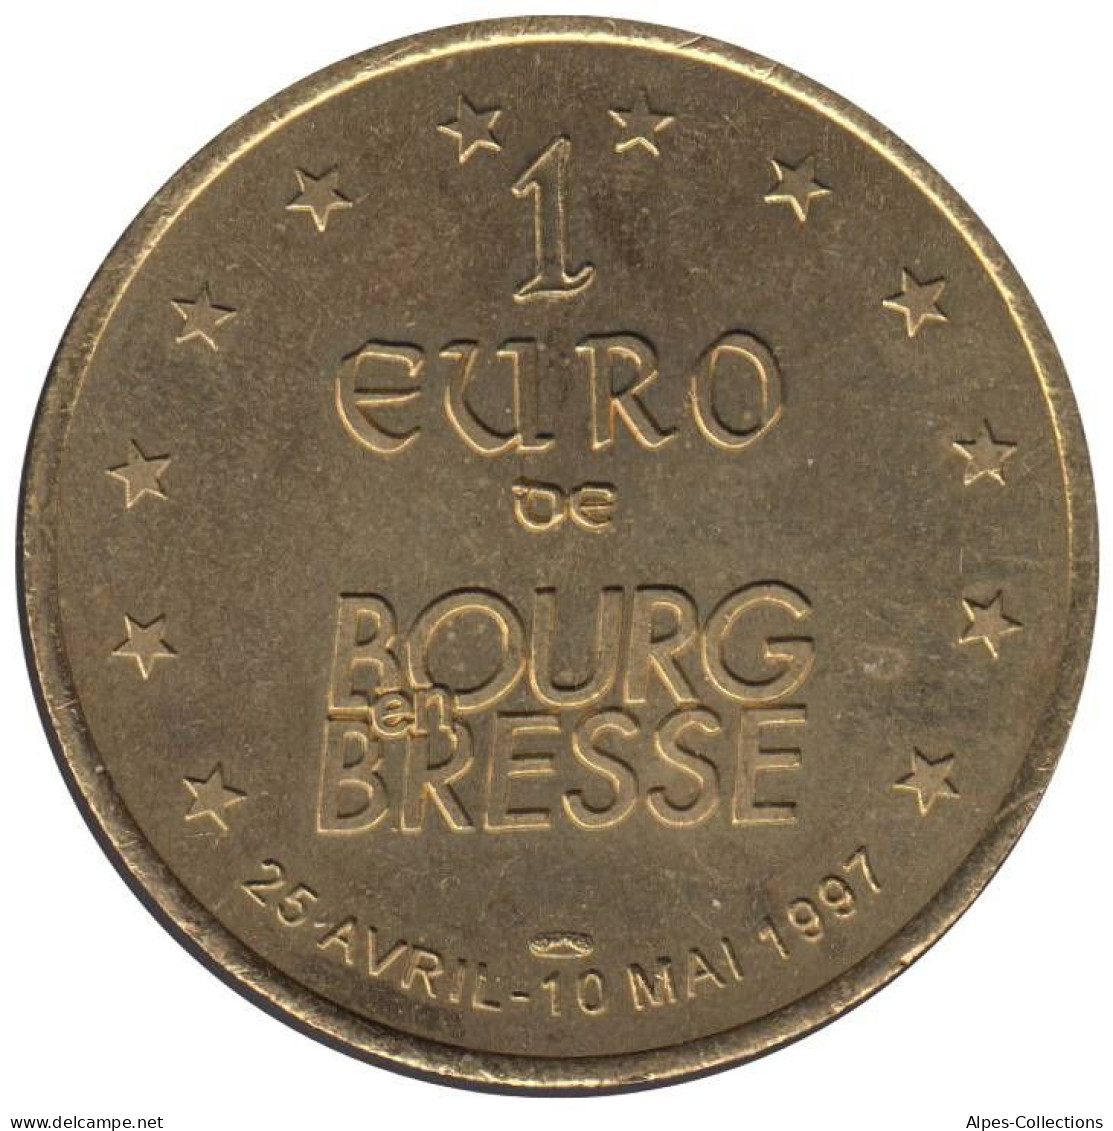 BOURG EN BRESSE - EU0010.3 - 1 EURO DES VILLES - Réf: T266 - 1997 - Euro Der Städte